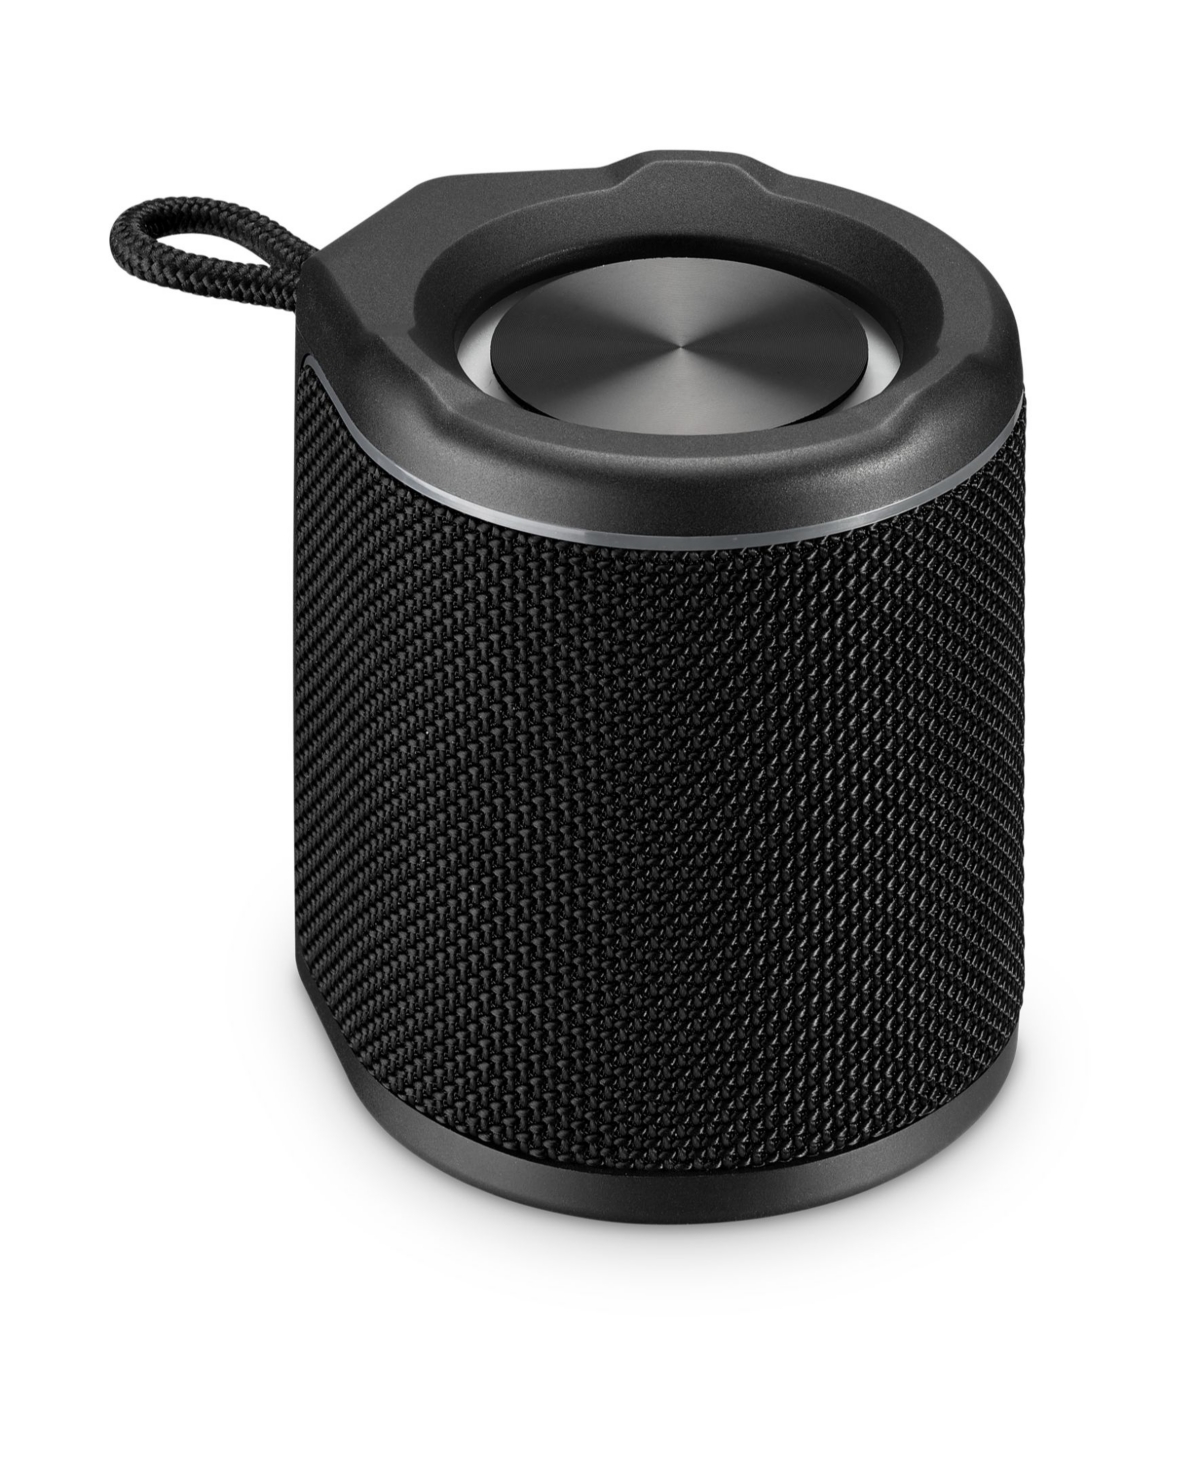 Ilive Light Up Wireless Water-resistant Fabric Speaker In Black